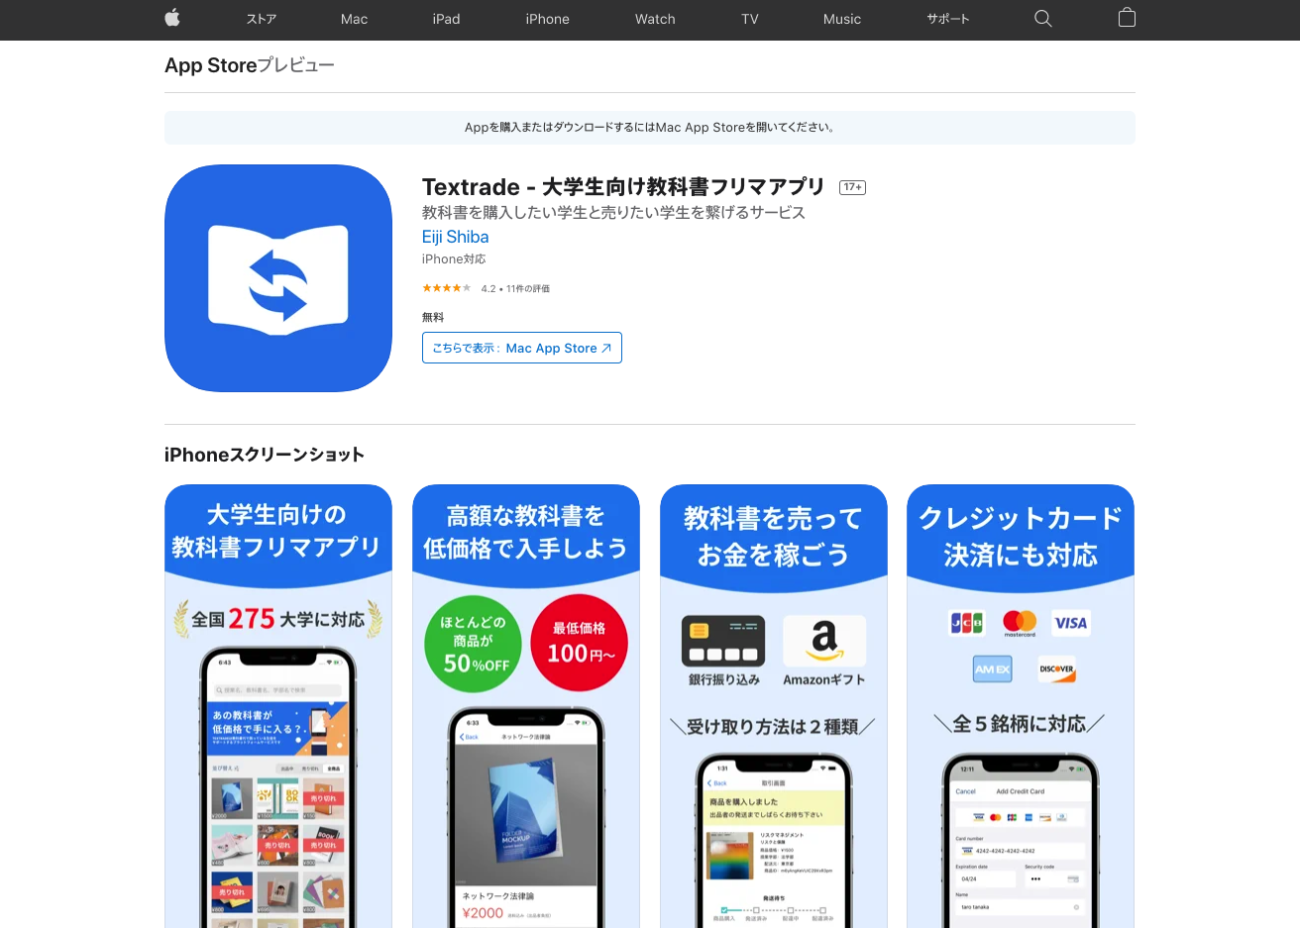 Textrade - 大学生向け教科書フリマアプリ